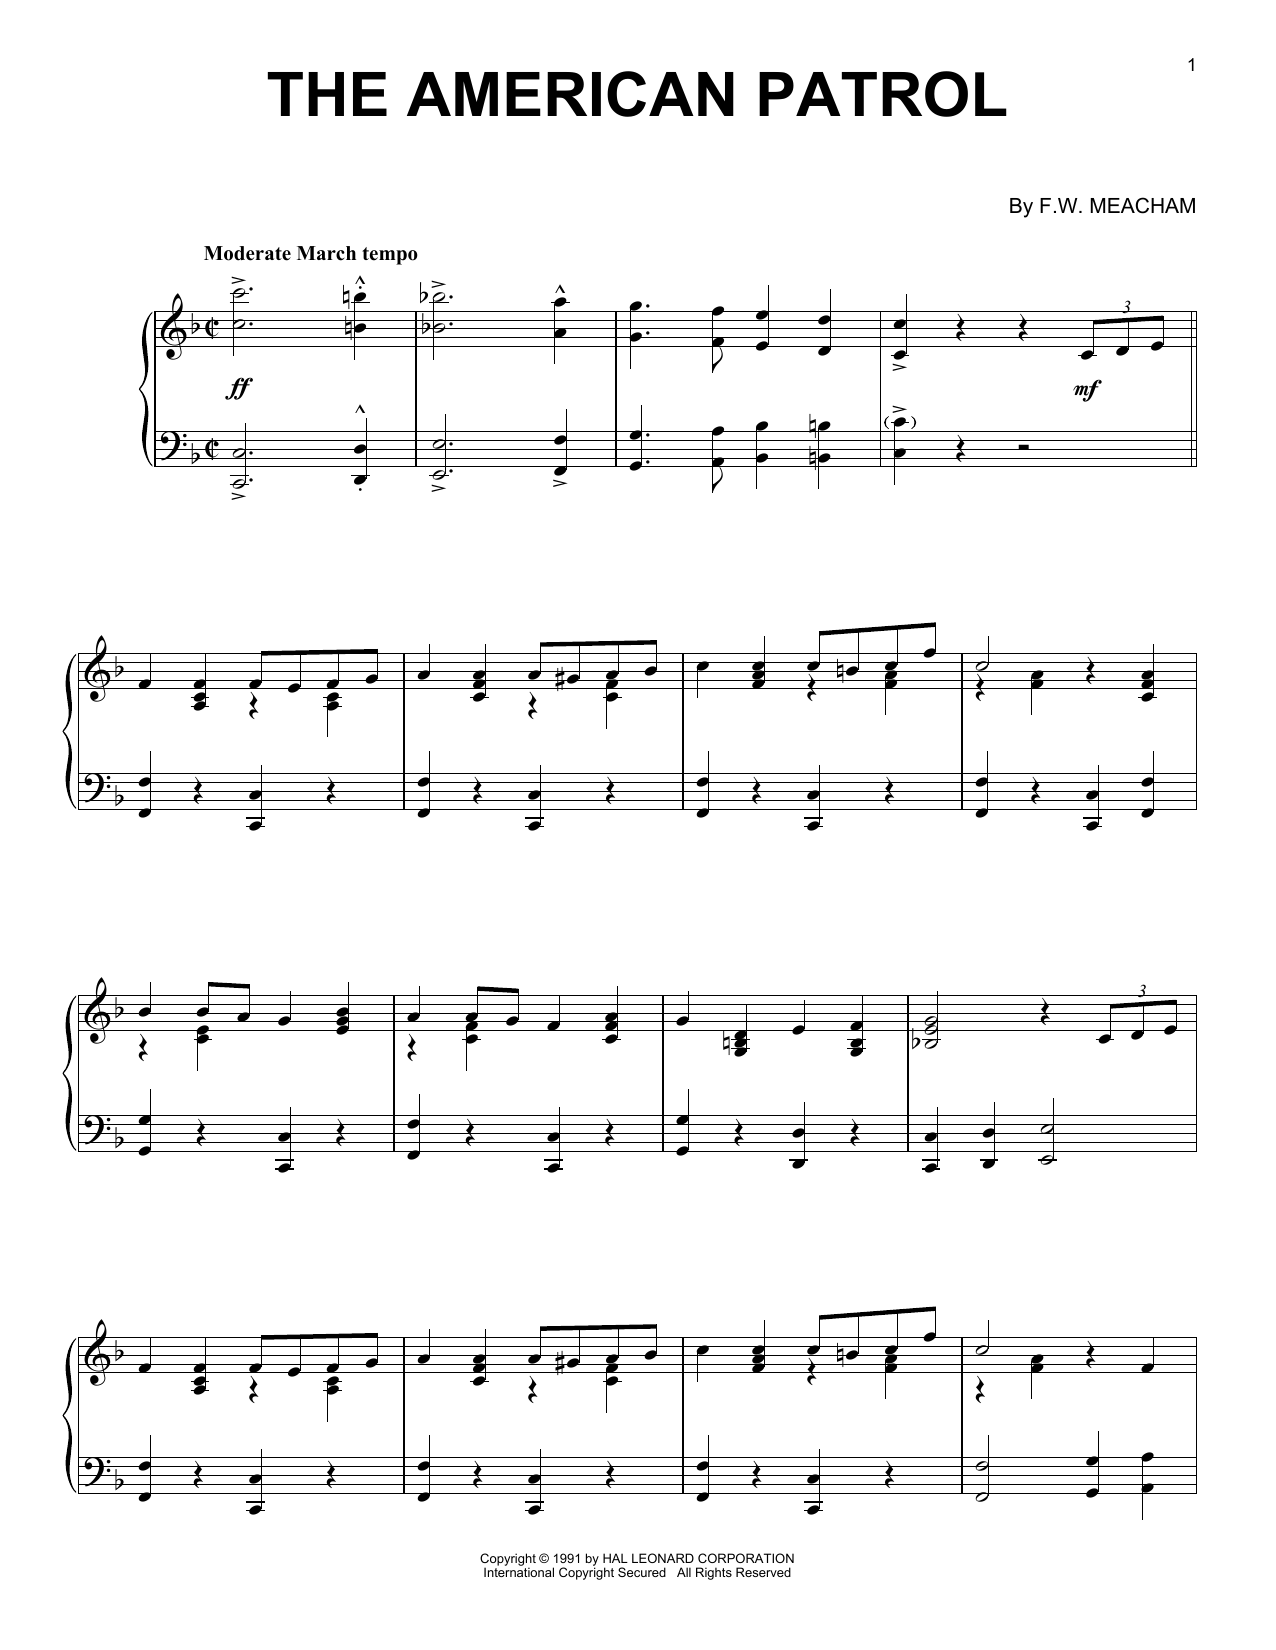 F.W. Meacham The American Patrol sheet music notes printable PDF score